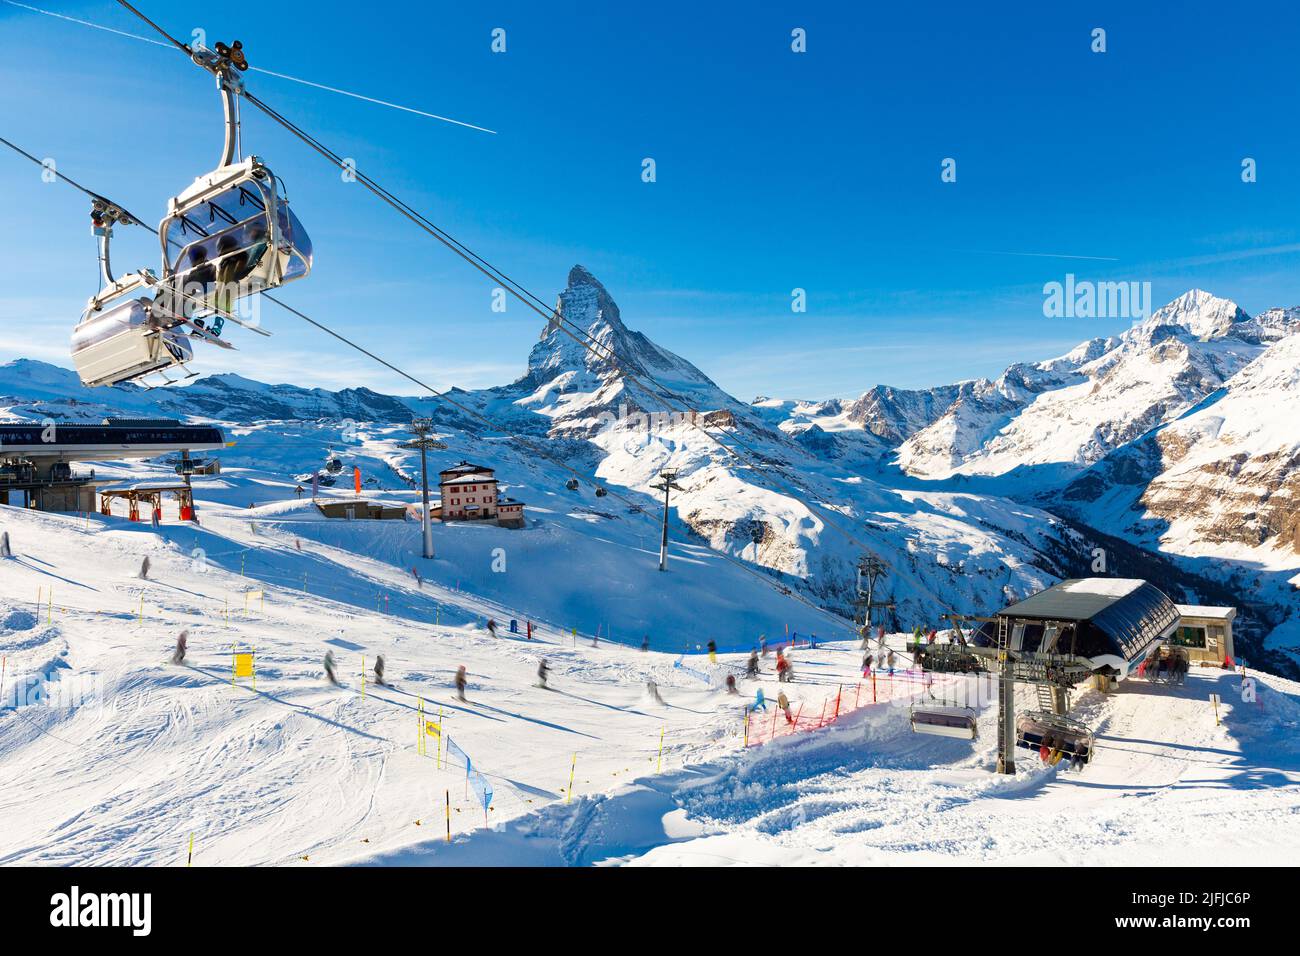 Alpine landscape with chairlift station of ski resort at foot of Matterhorn peak Stock Photo